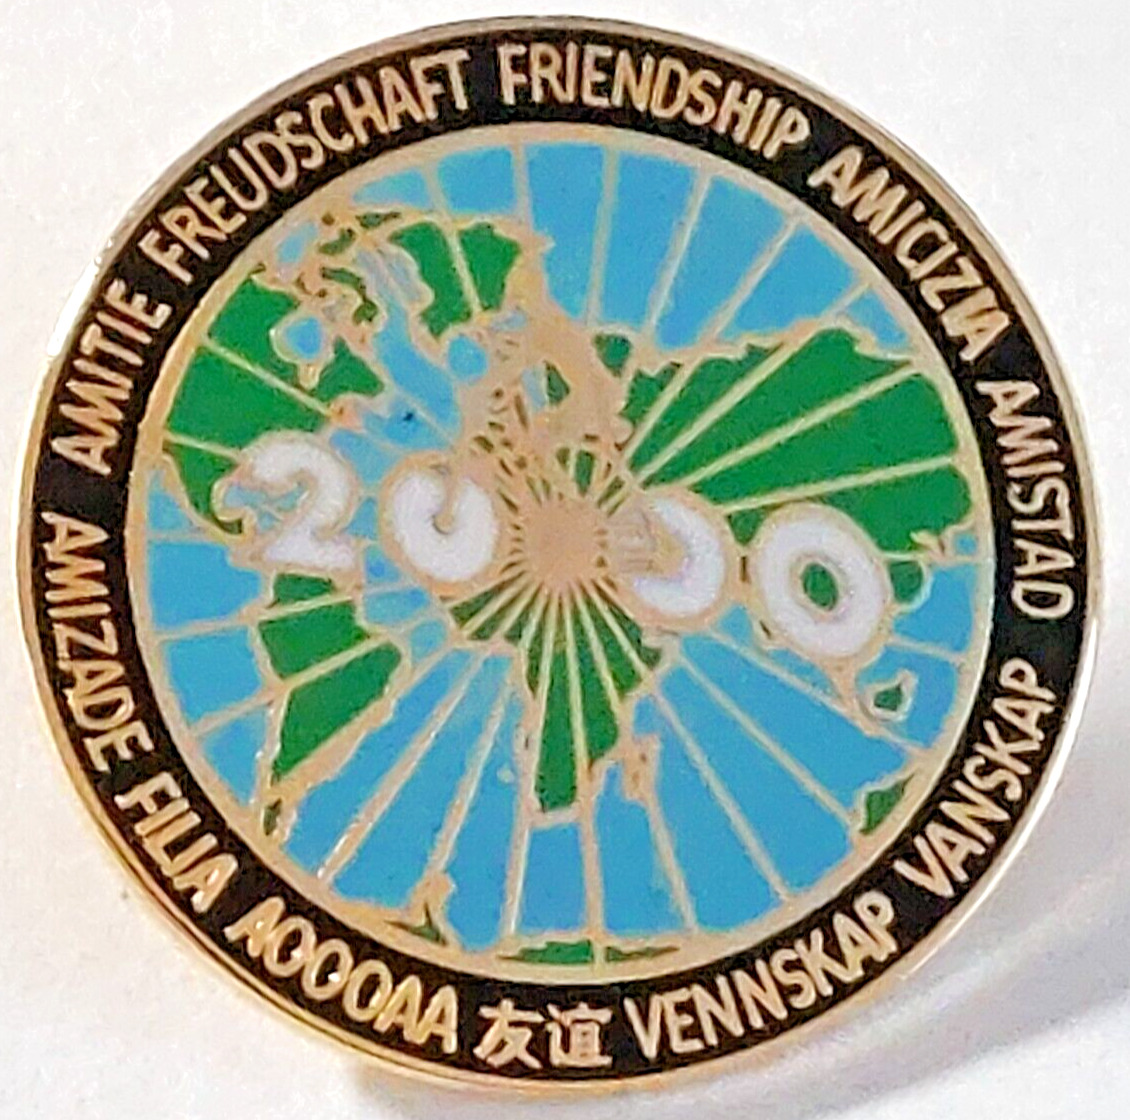 Cycling 2000 World Friendship Lapel Pin (091223)